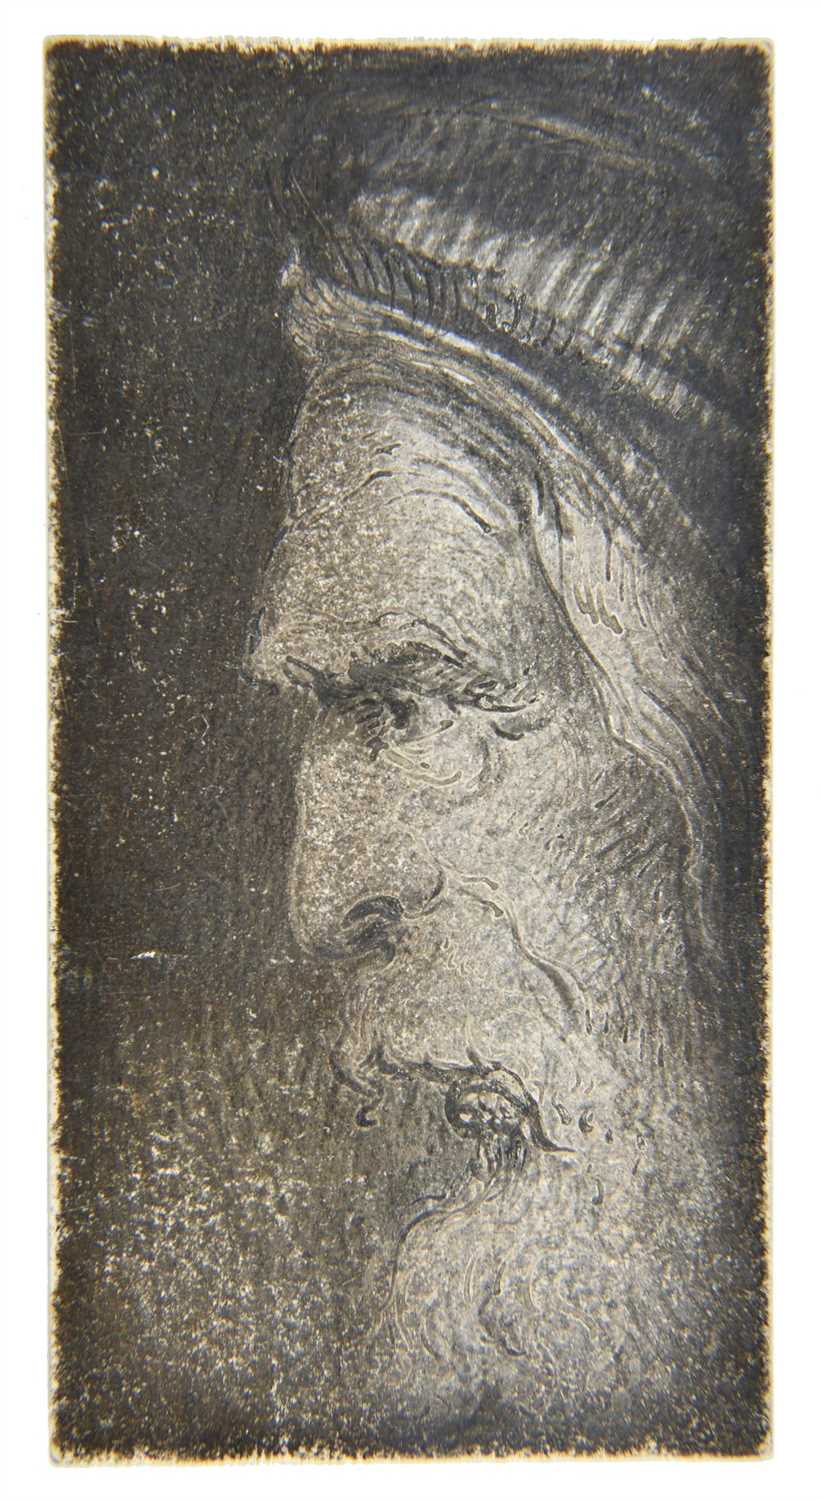 Lot 309 - Jones (John Edward, 1806-1862). Head of an Old Testament Prophet